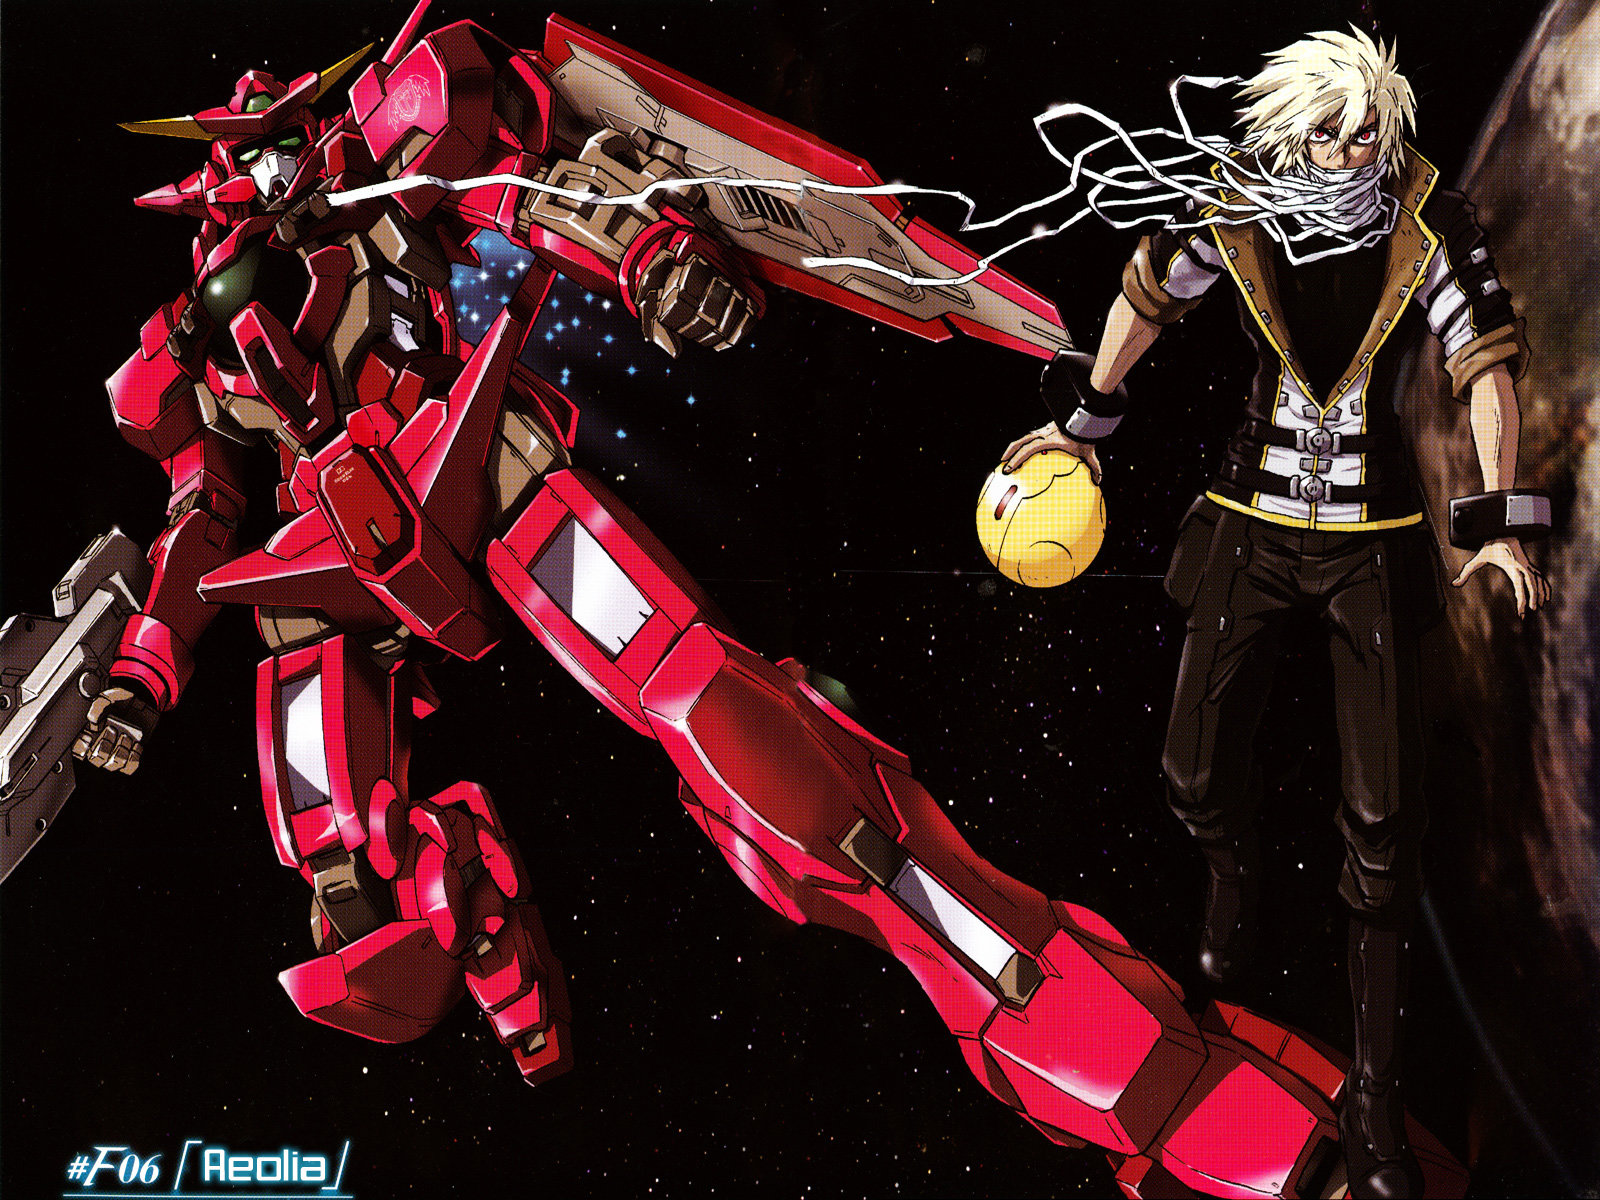 Best Mobile Suit Gundam 00 background ID:83386 for High Resolution hd 1600x1200 desktop